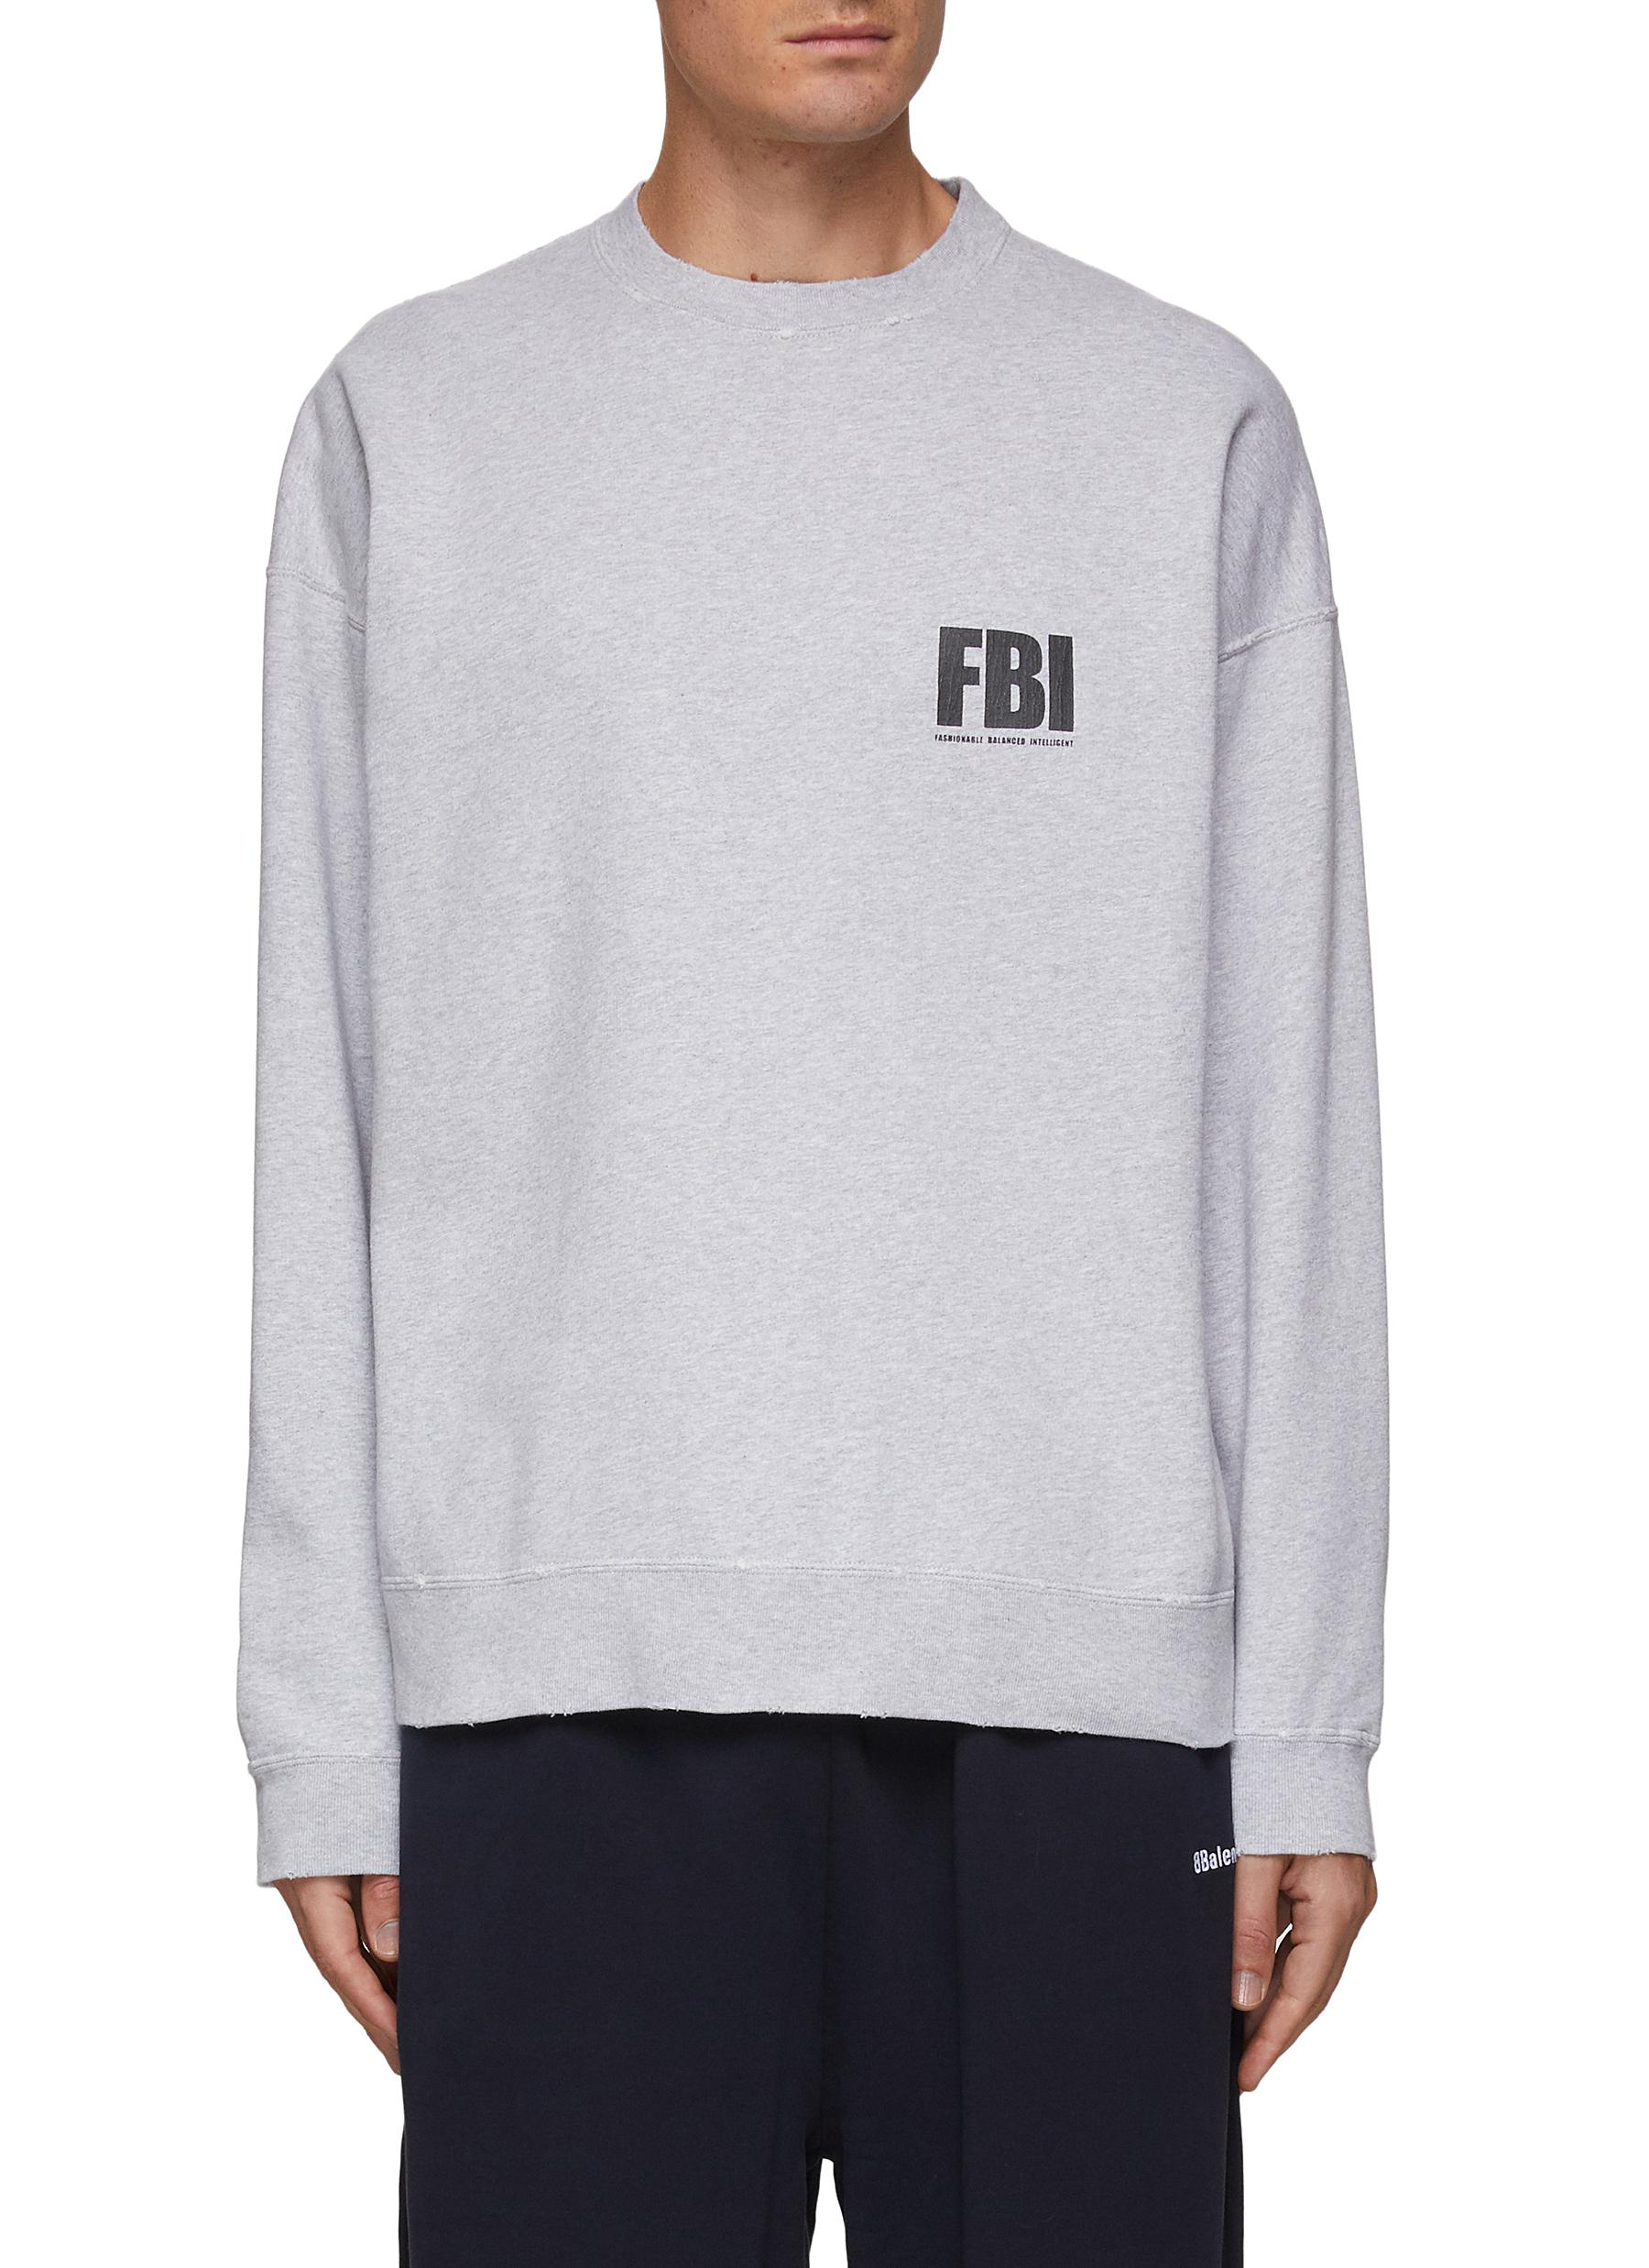 'FBI' Medium Molleton Cotton Jersey Sweatshirt